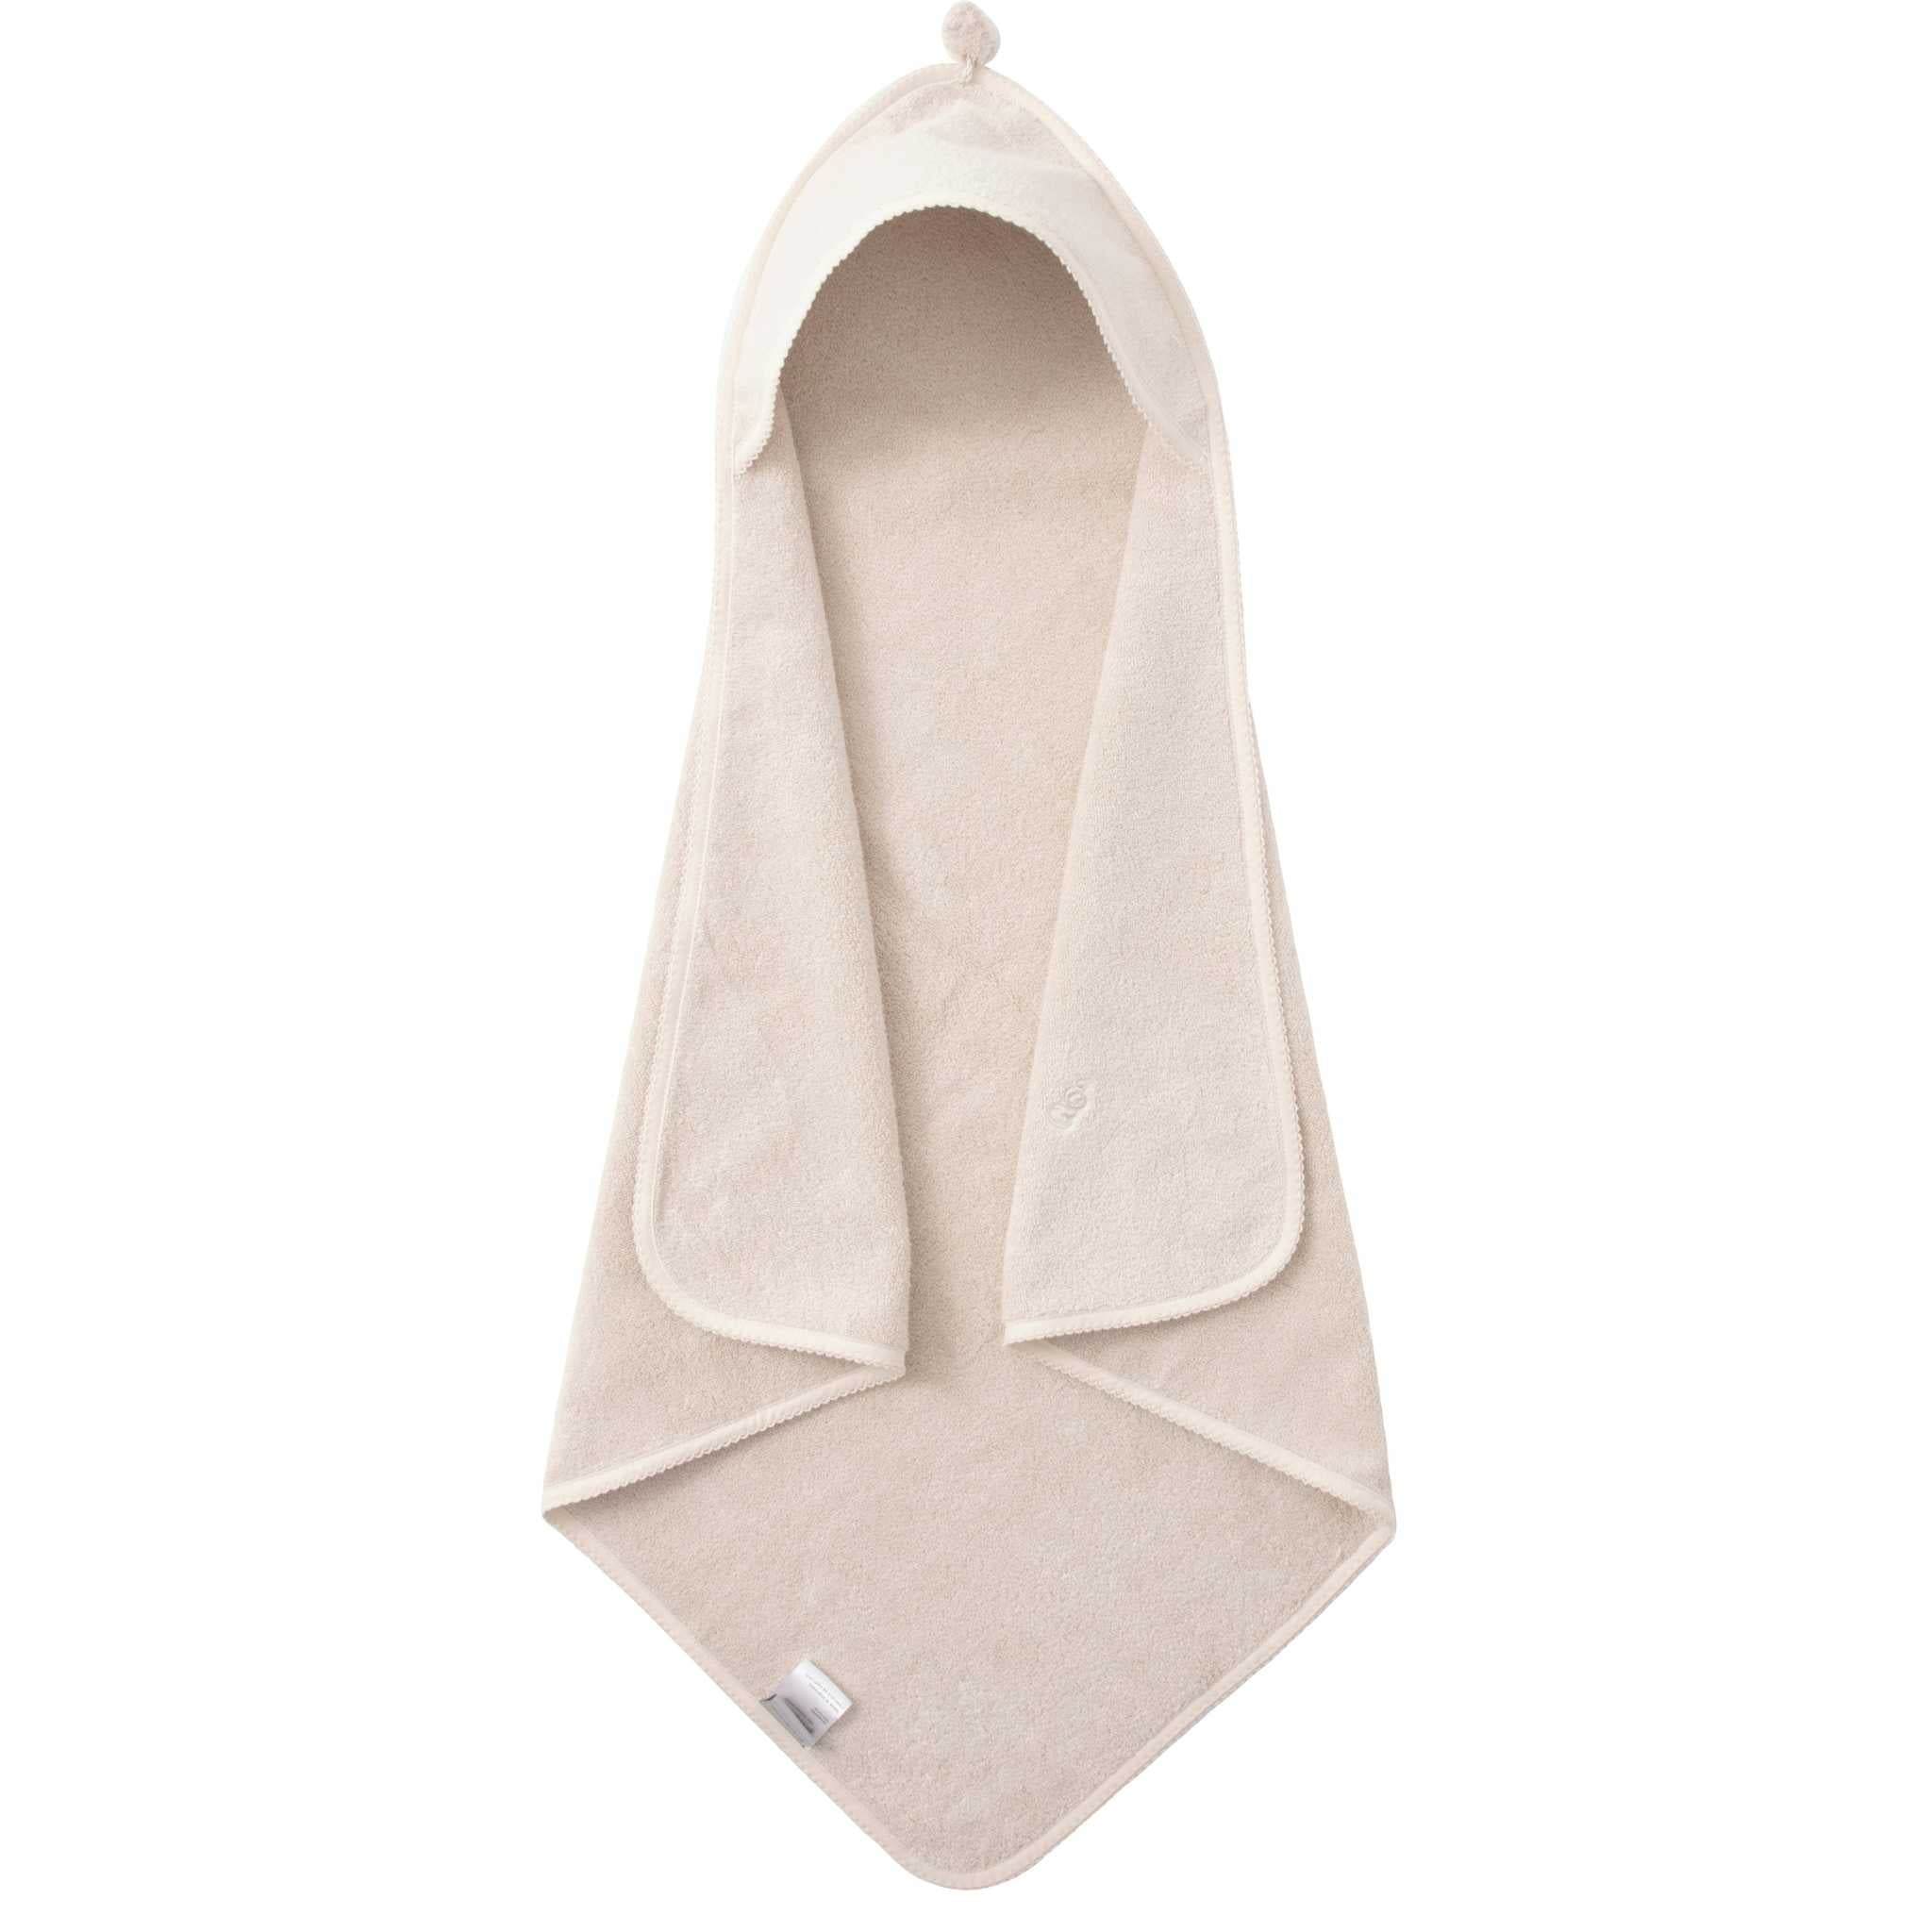 Garbo & Friends Hooded Towel - Sand - Main Image